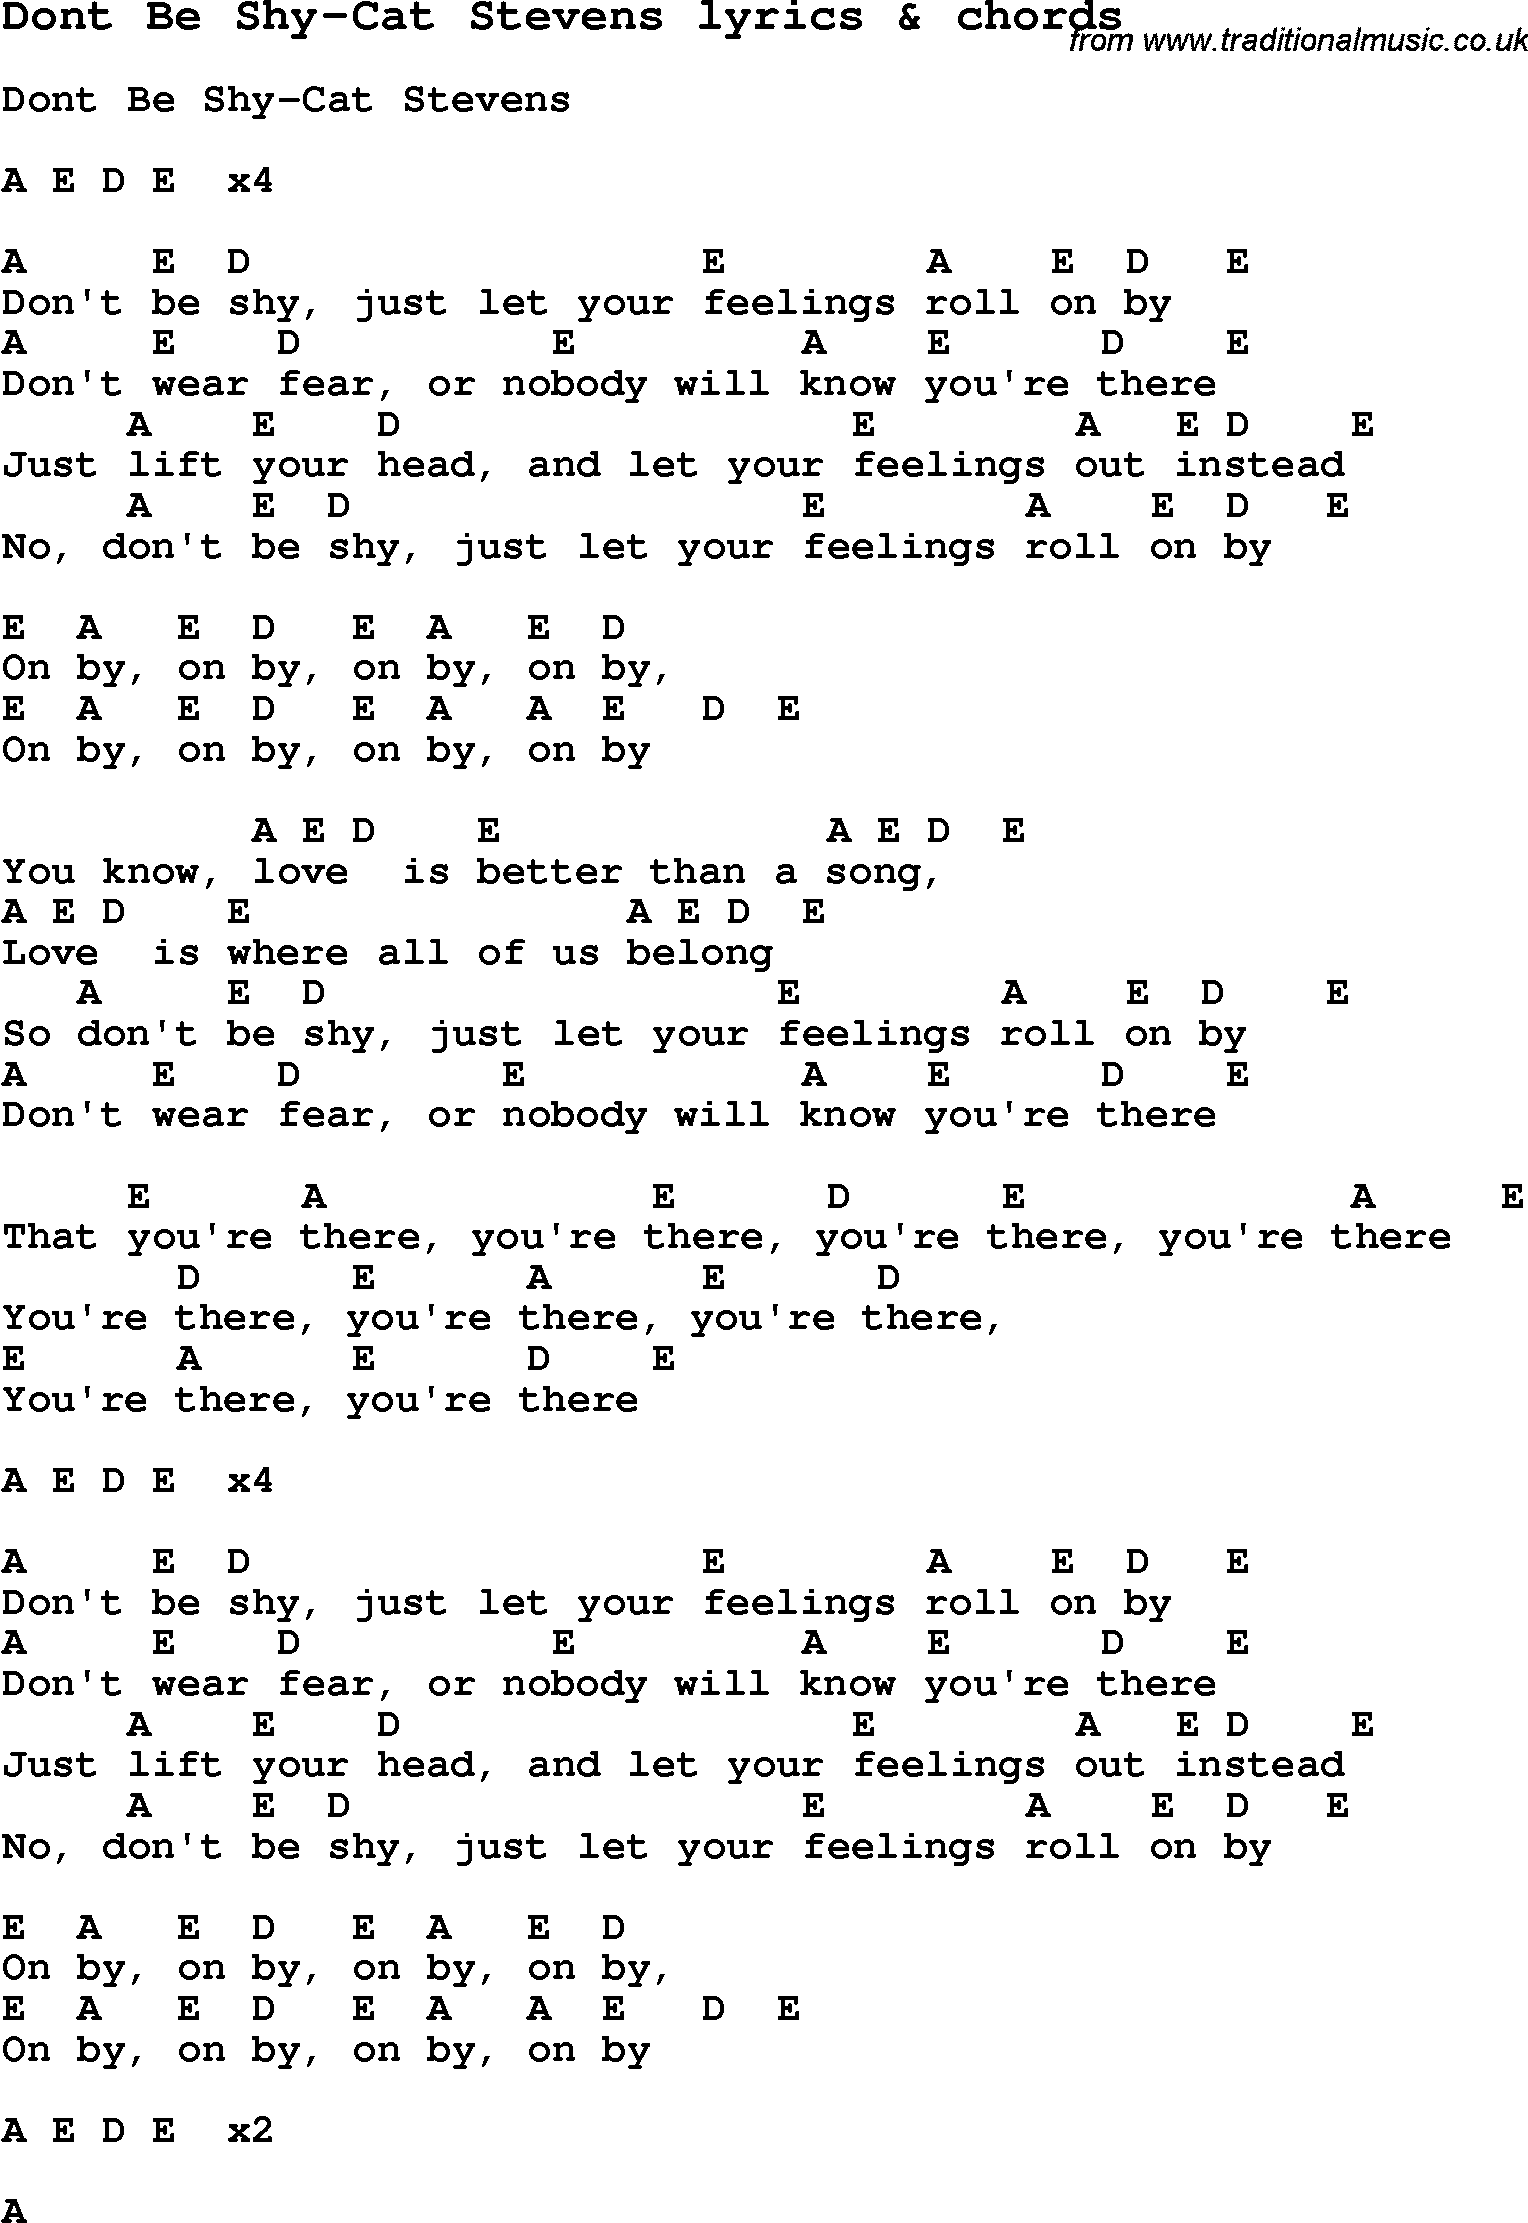 Love Song Lyrics for: Dont Be Shy-Cat Stevens with chords for Ukulele, Guitar Banjo etc.